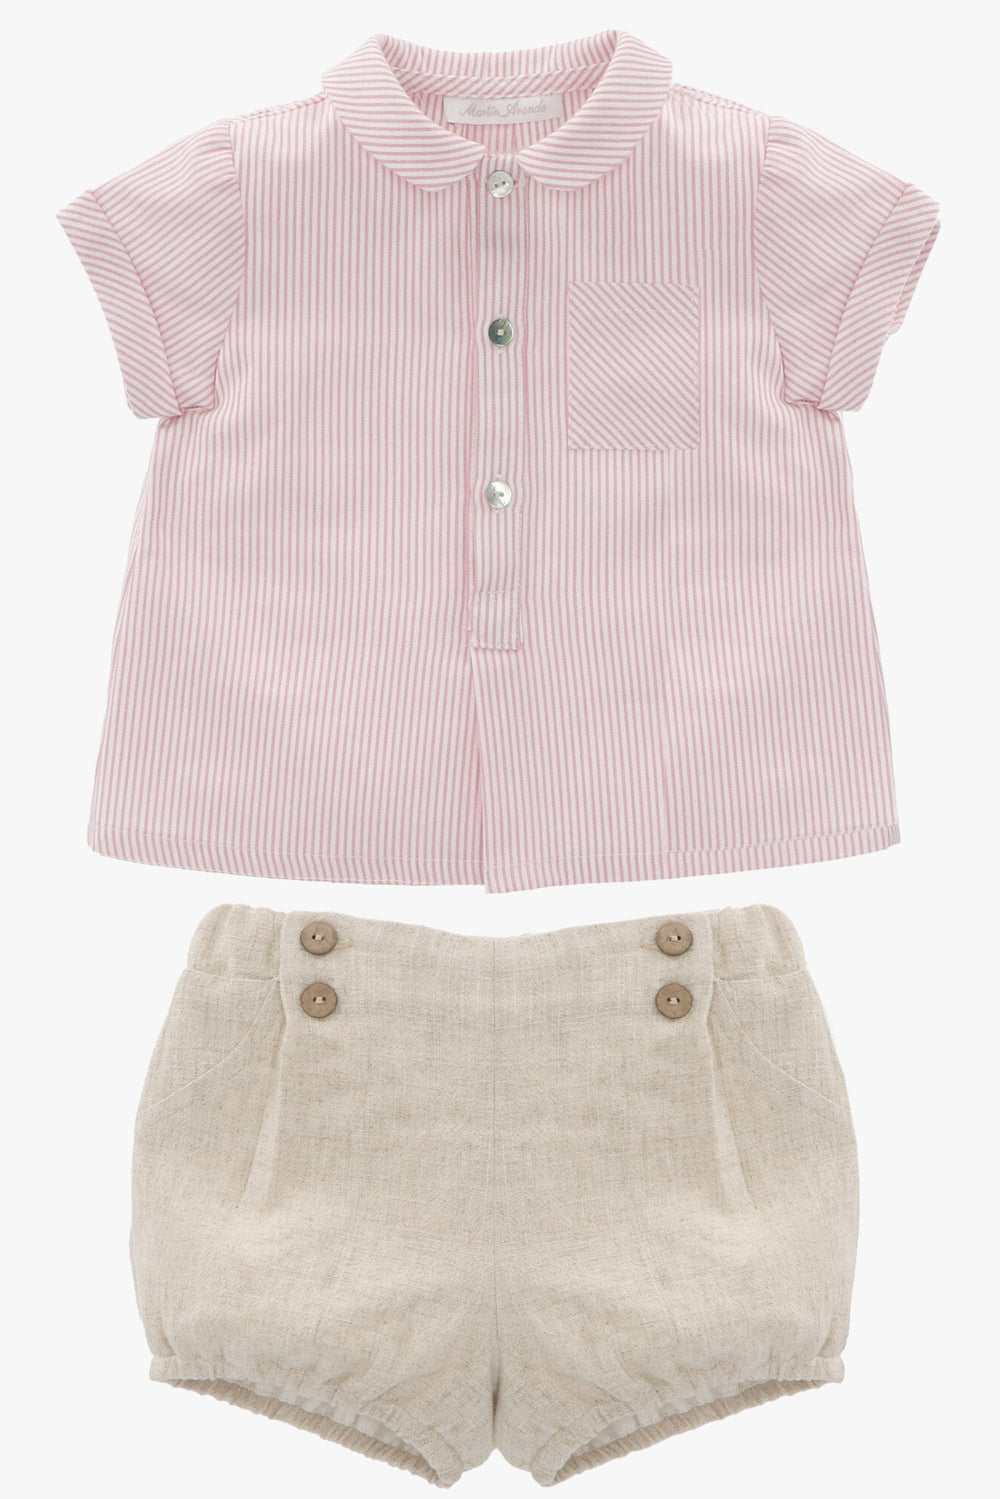 Martín Aranda "Vincent" Stripe Shirt & Linen Jam Pants | Millie and John